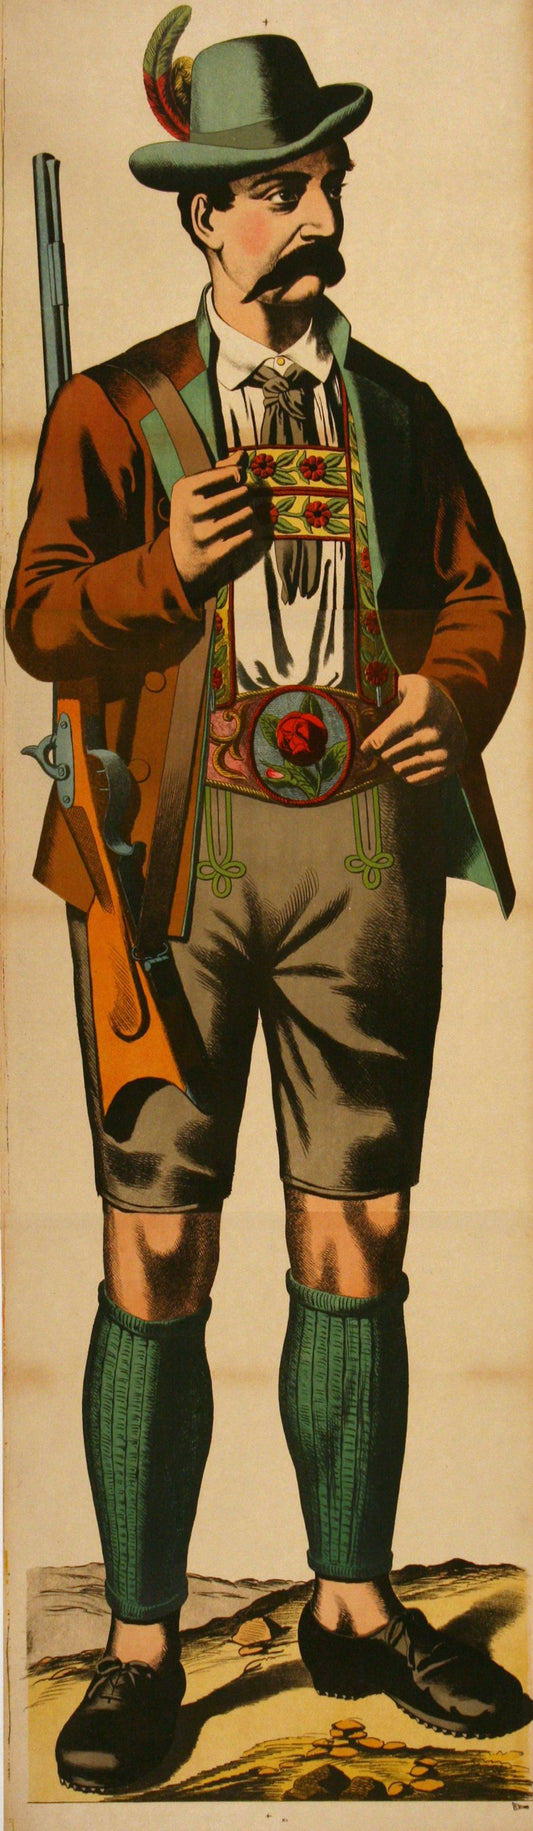 Original C1880 Vintage Poster - Man in Lederhosen 01  - Wissembourg Collection